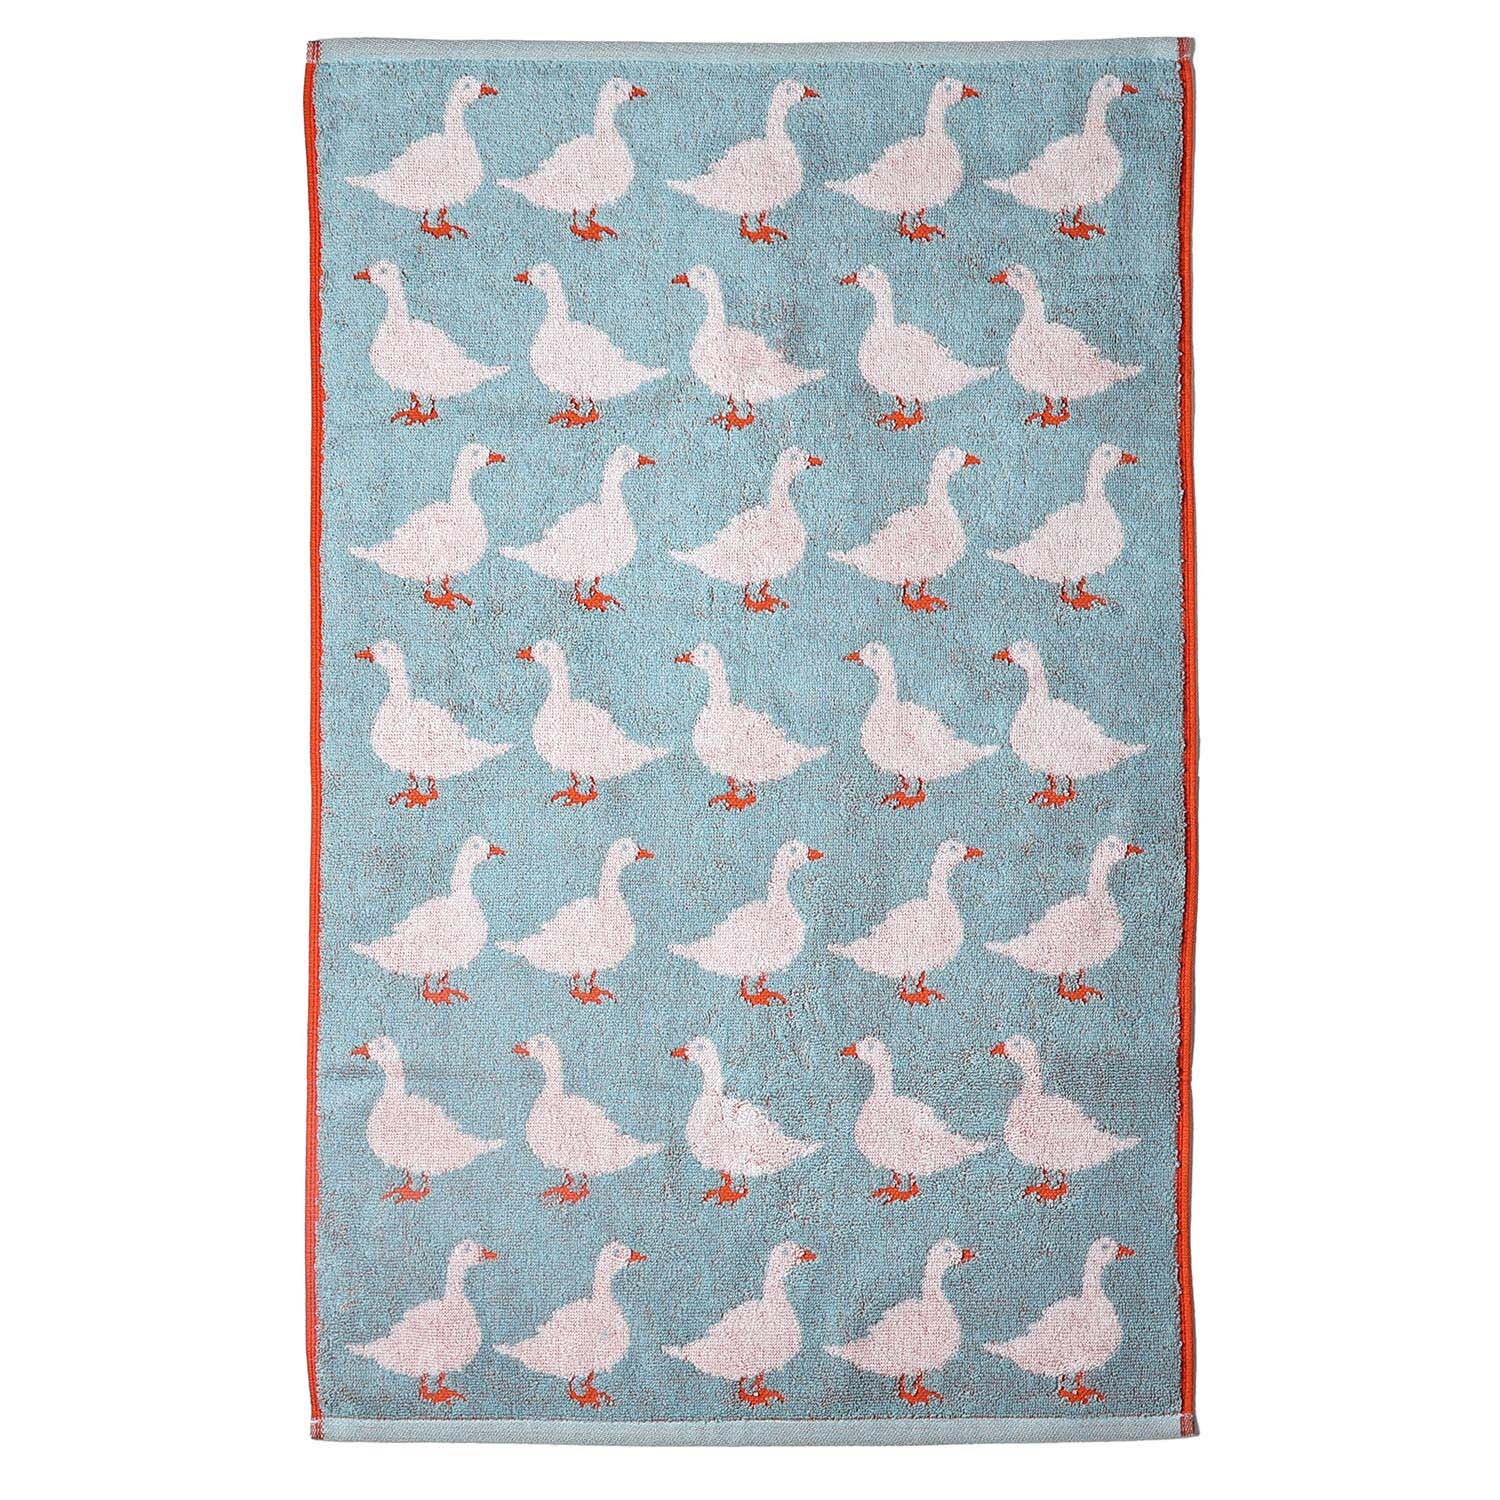 Goose Hand Towel - Blue Image 2